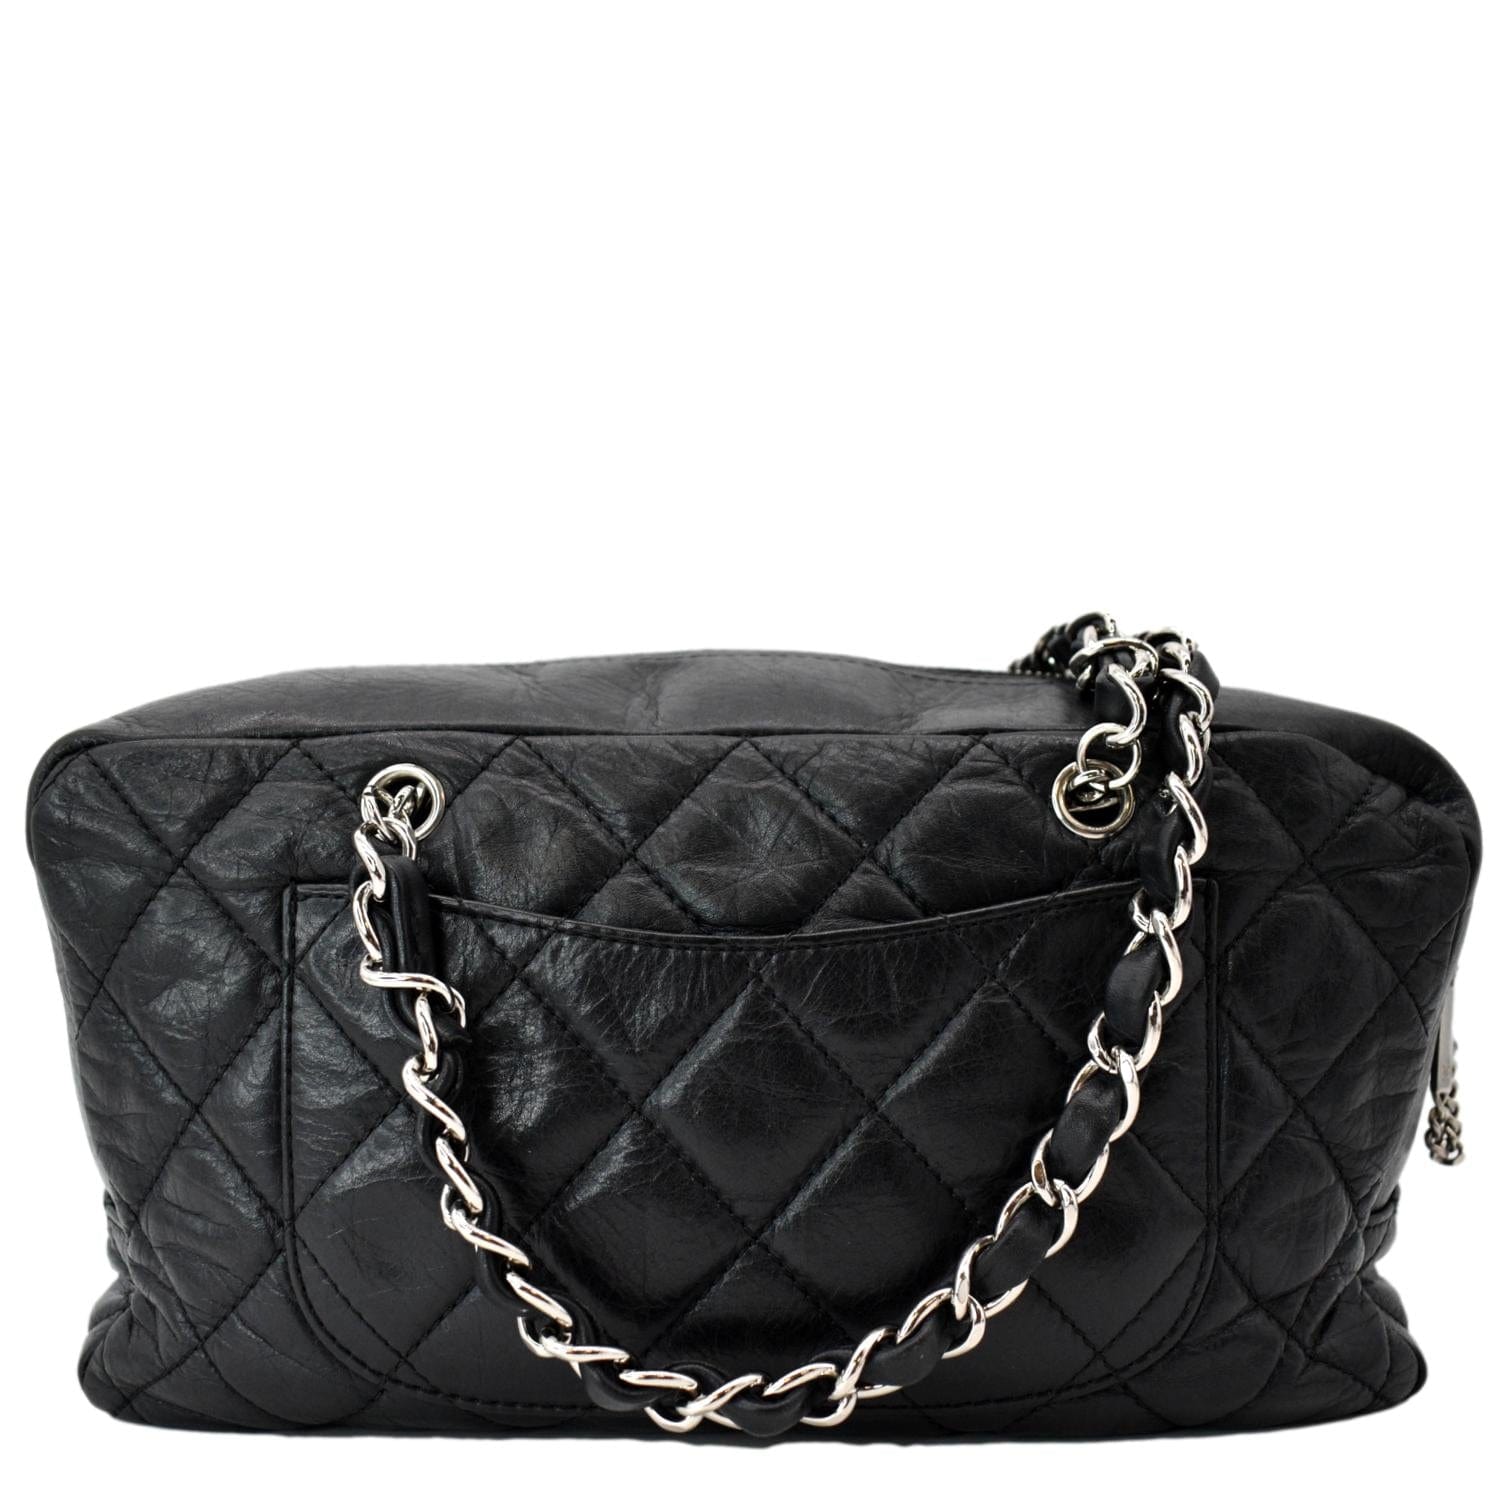 Chanel Chanel Black Quilted Calfskin Leather Chain Shoulder Bag